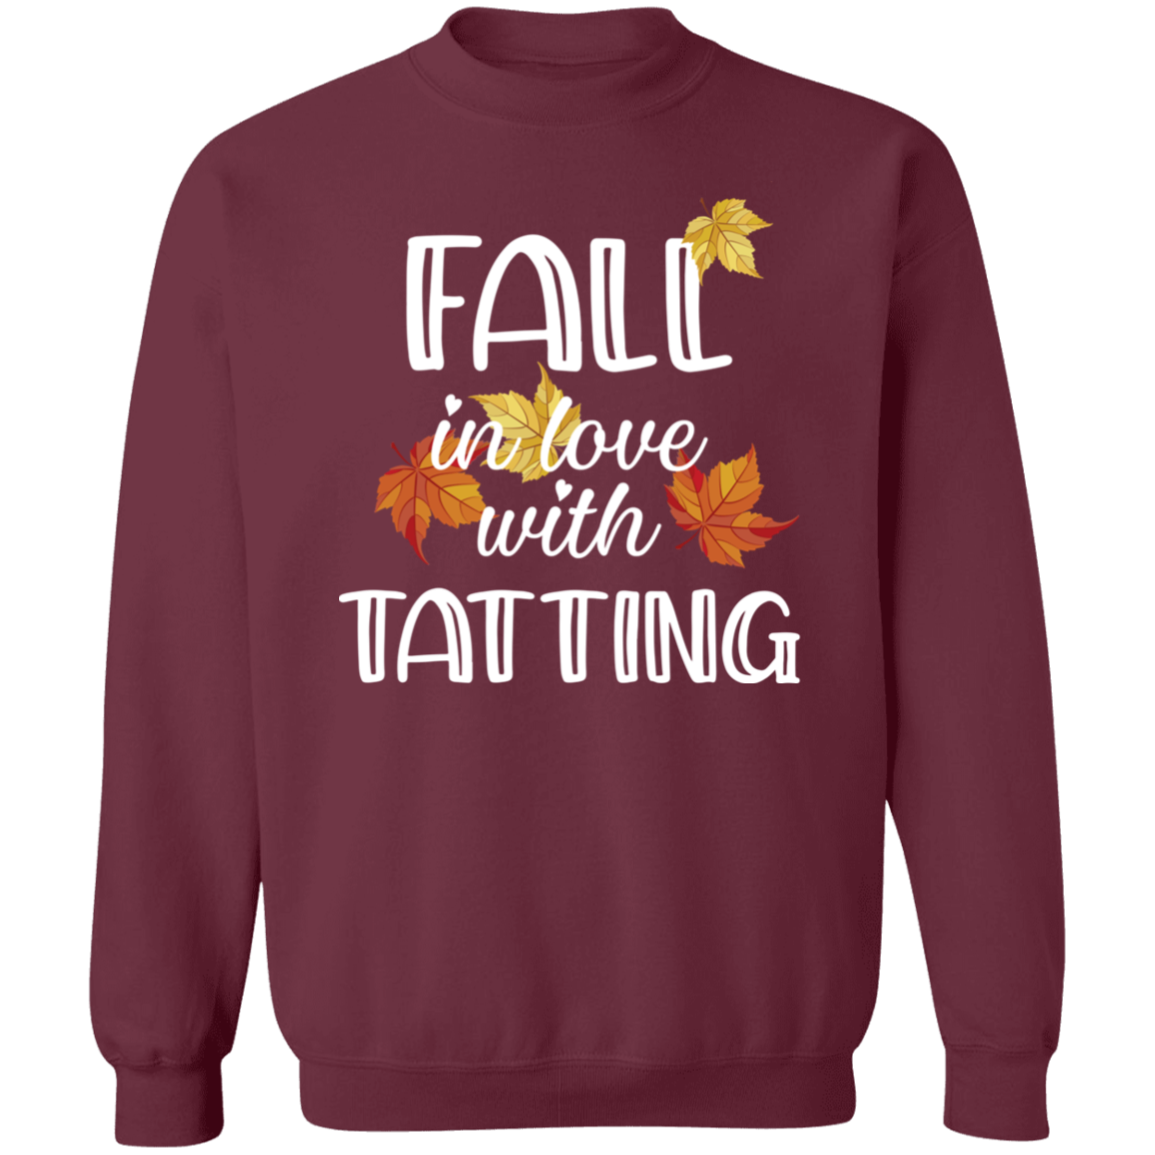 Fall in Love with Tatting Crewneck Pullover Sweatshirt